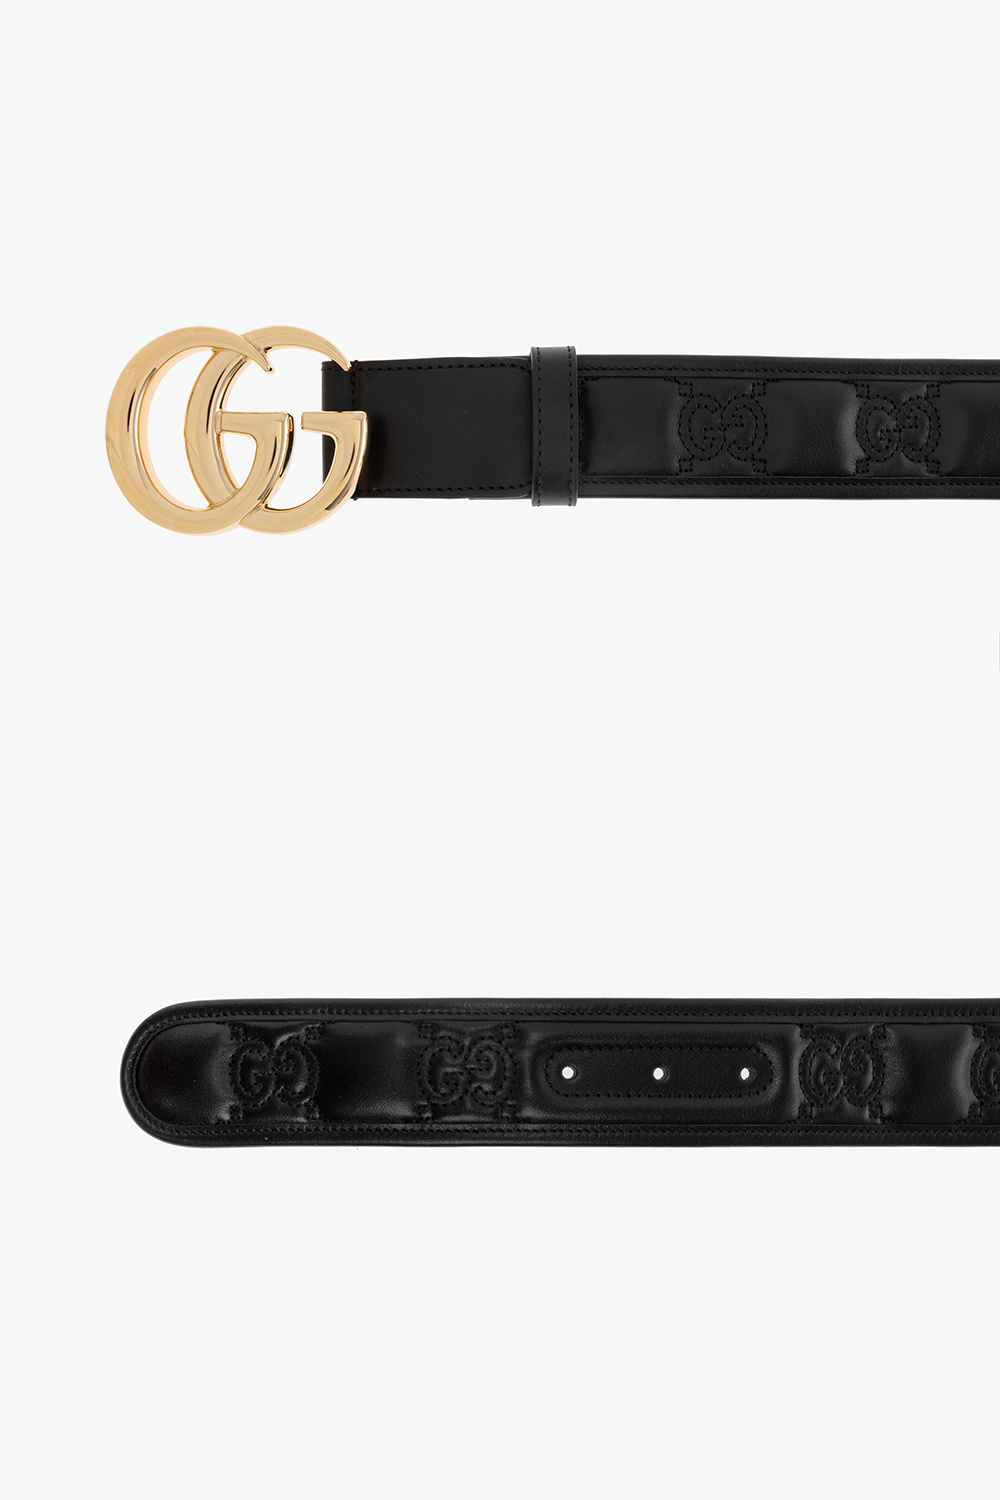 Gucci Leather GG Belt